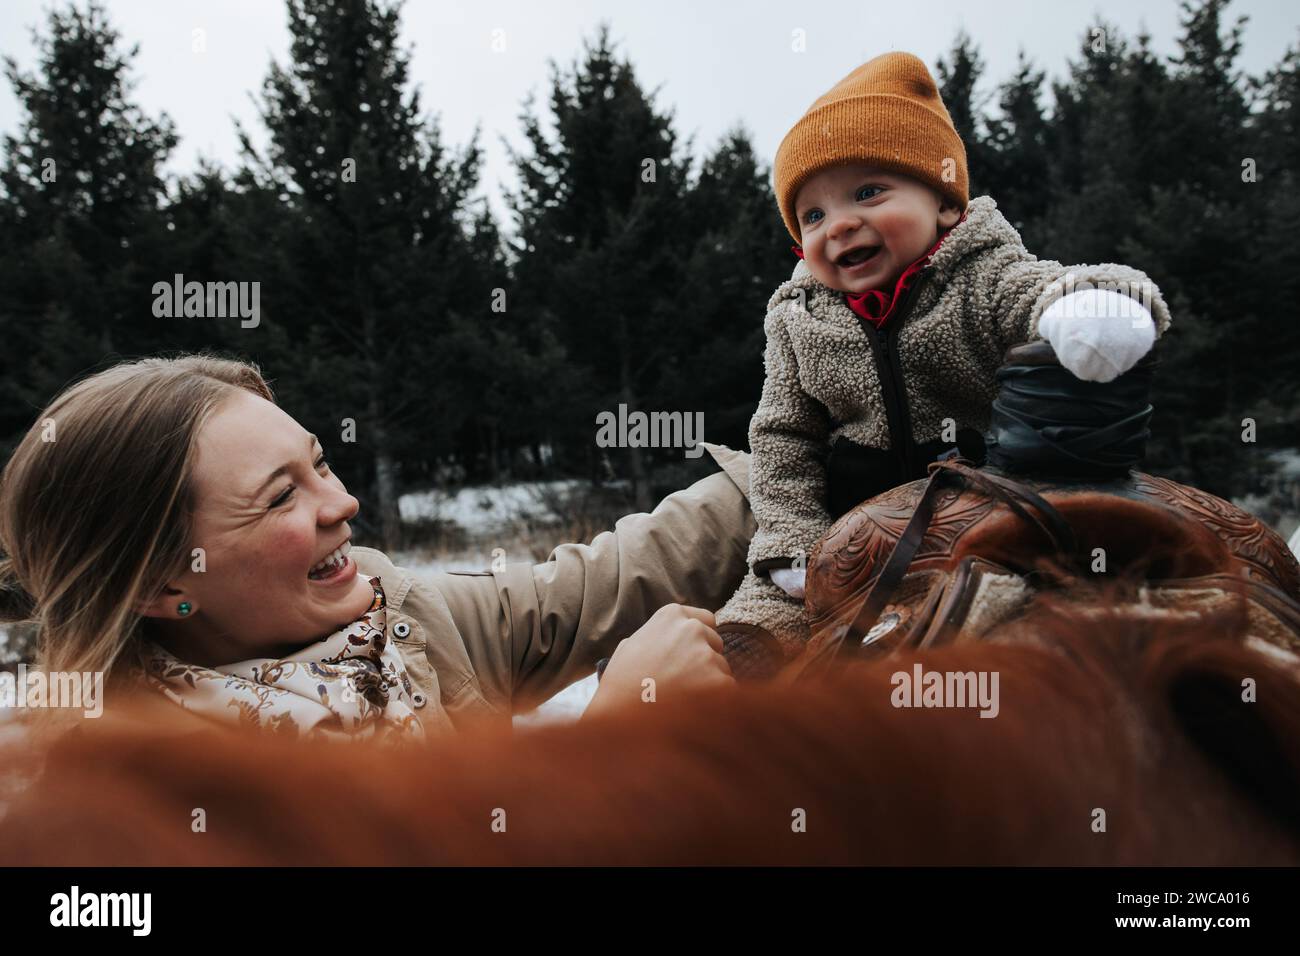 Mom happily holds baby boy on horseback adventure Stock Photo